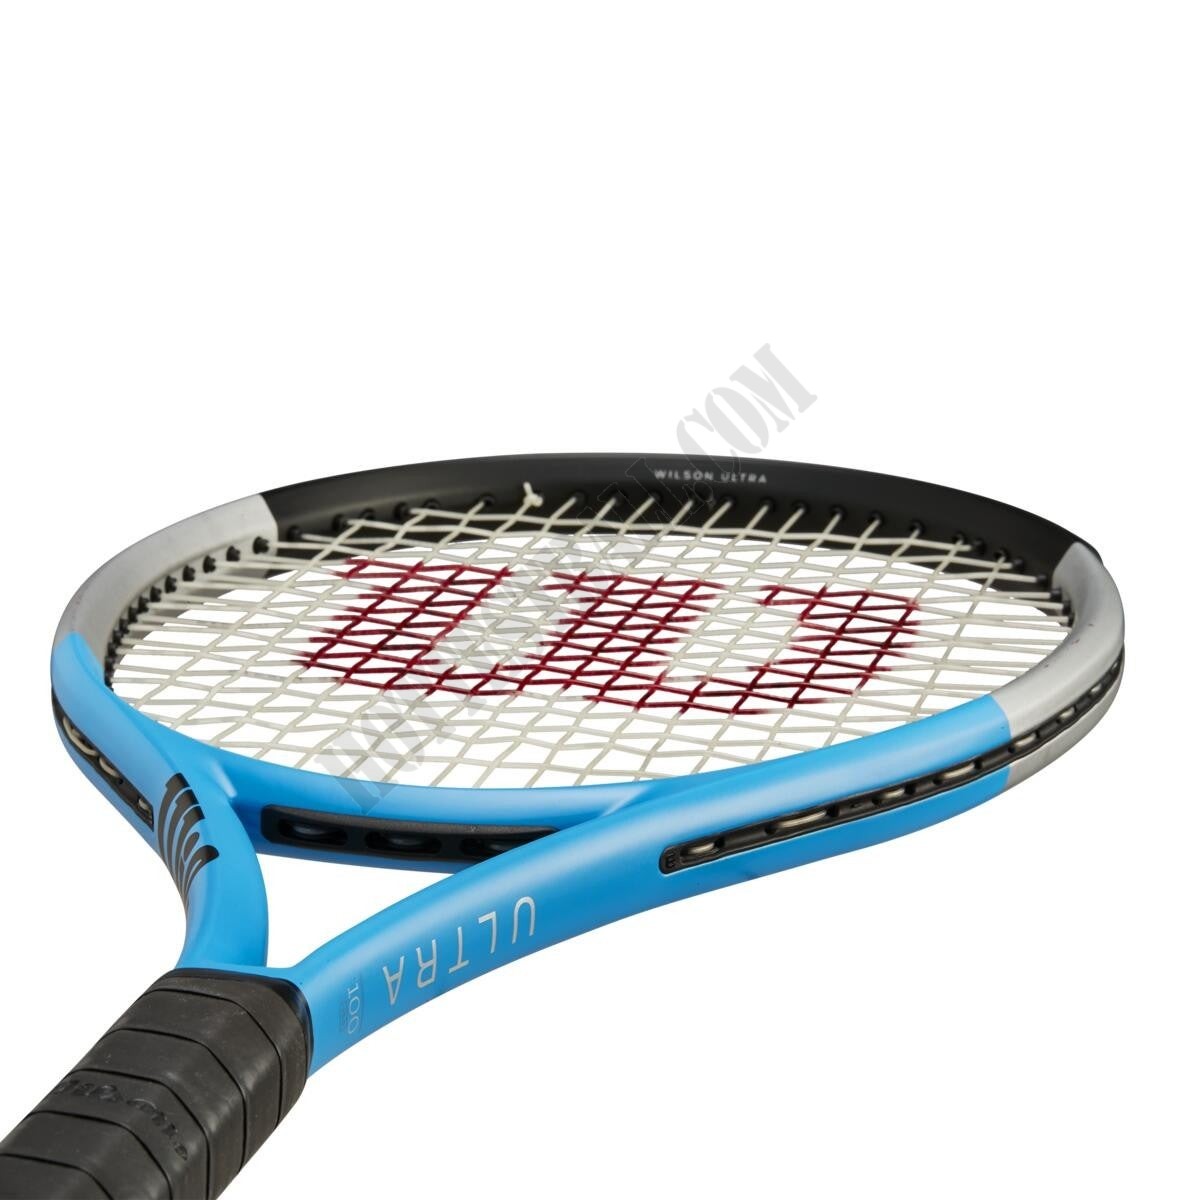 Ultra 100 v3 Reverse Tennis Racket - Wilson Discount Store - -4